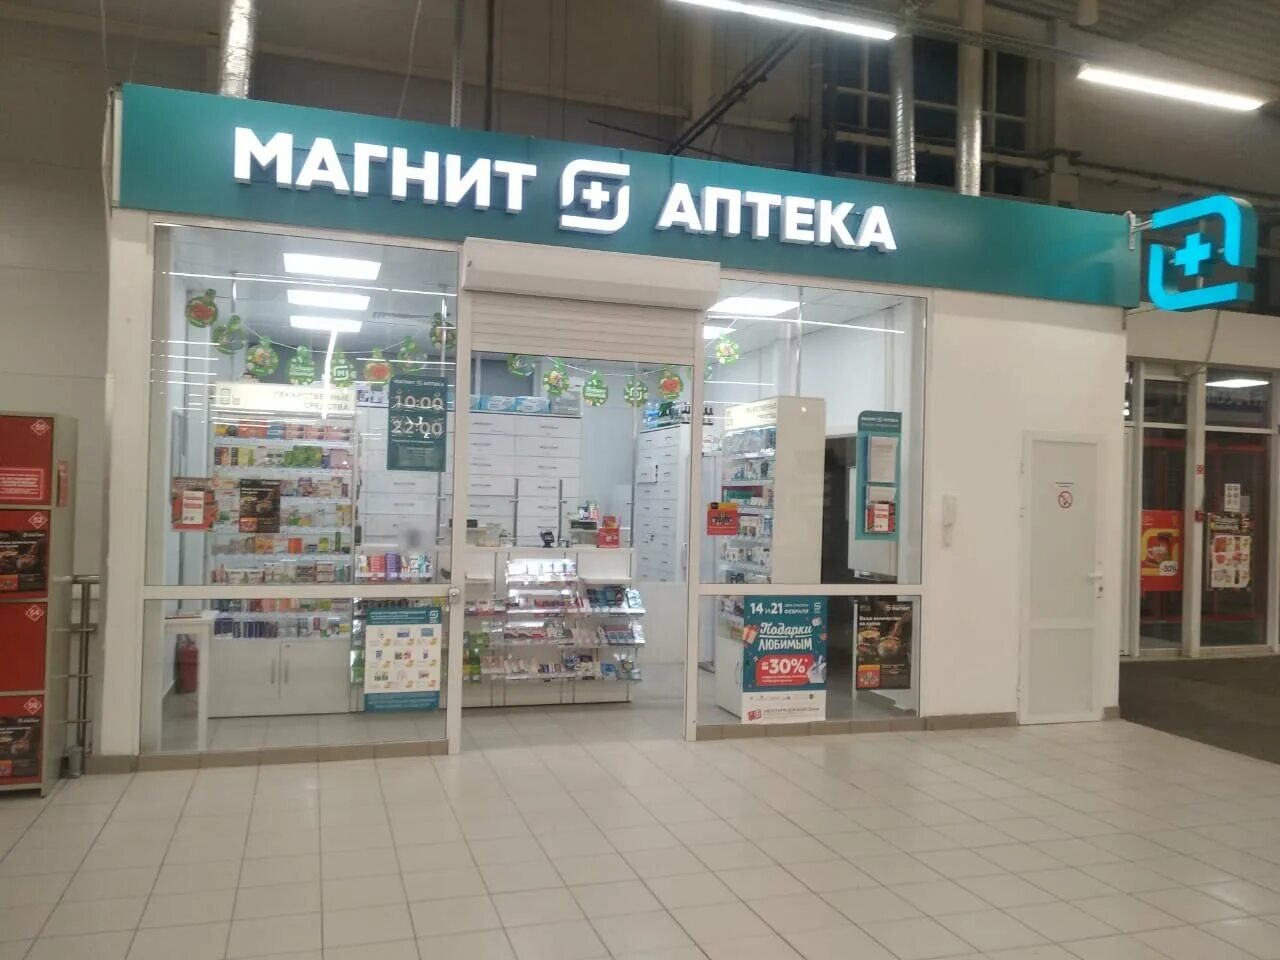 Е аптека екатеринбург. Кирова 33 Екатеринбург магнит. Магнит аптека. Магнит аптека вывеска. Магазин магнит аптека.